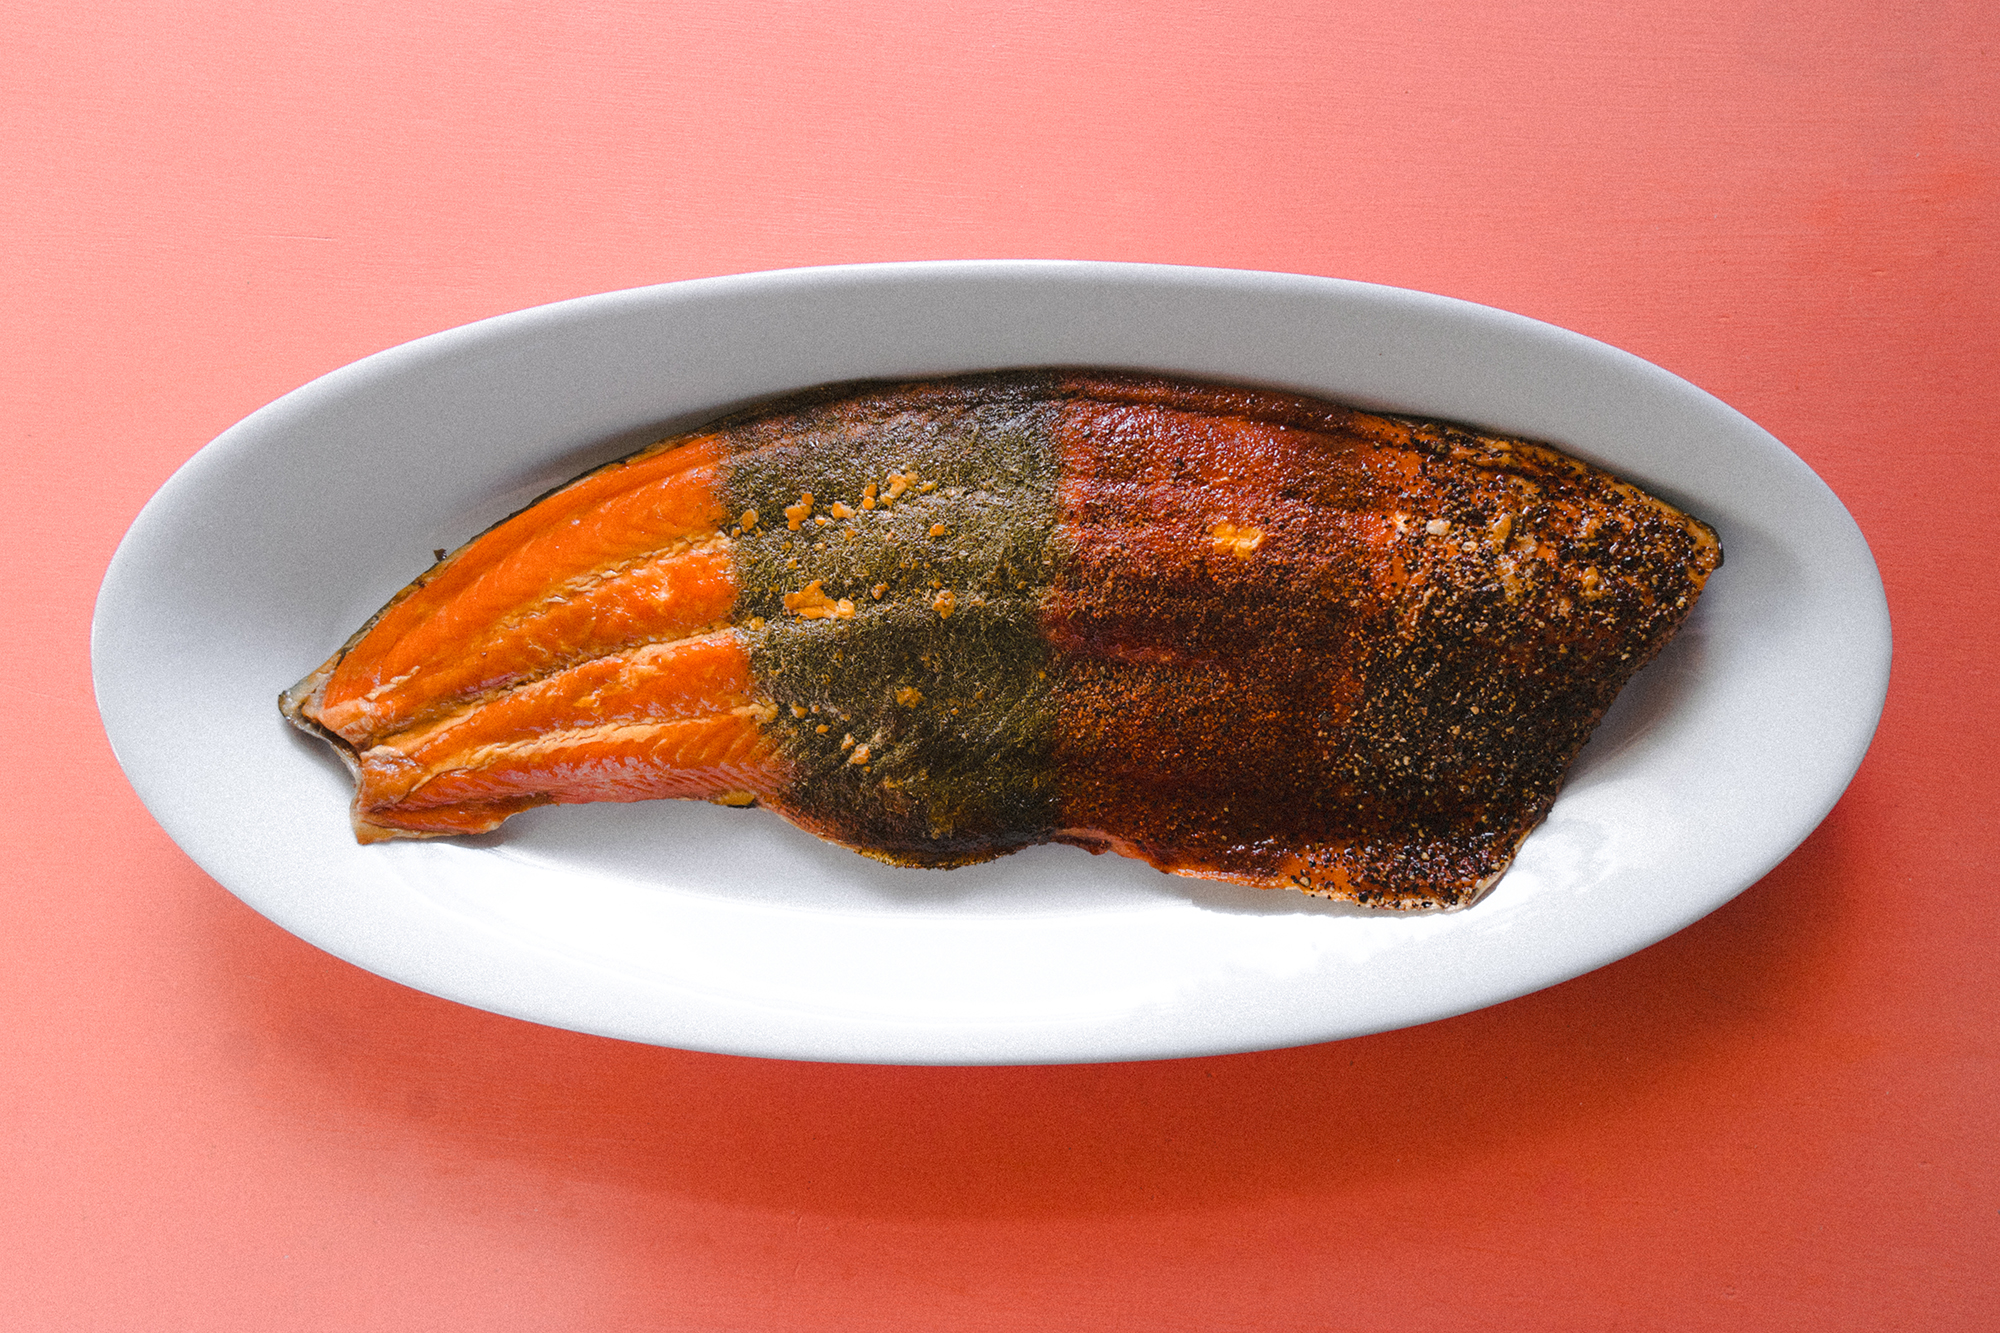 A filet of fish